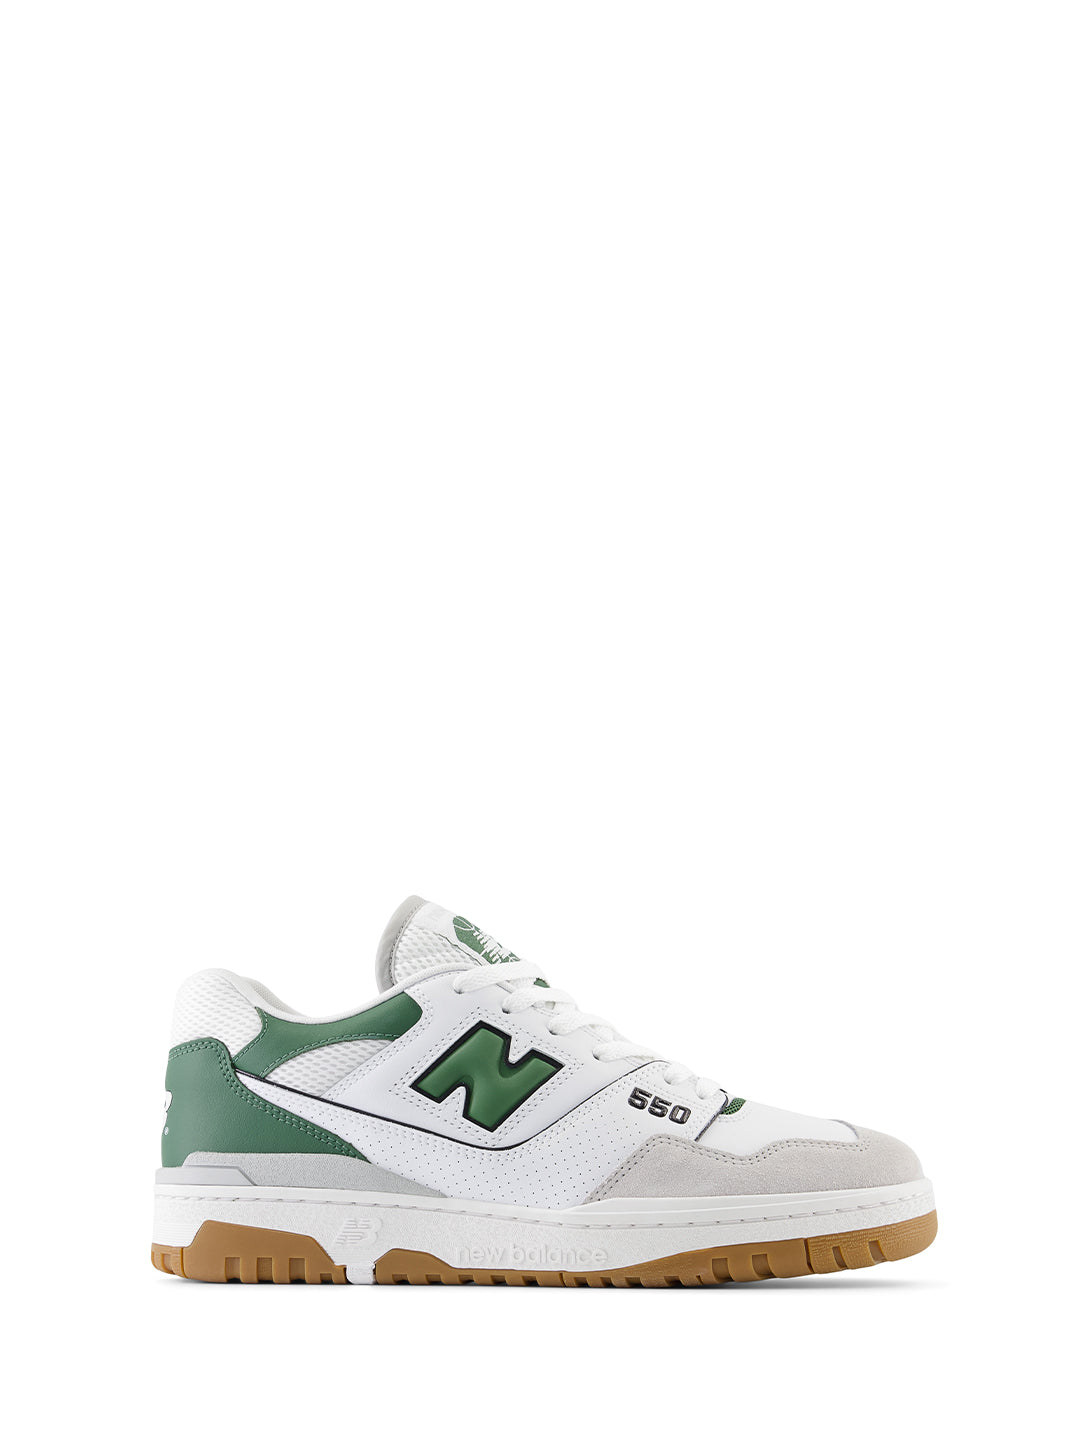 New balance 550 sneakers bianco e verde